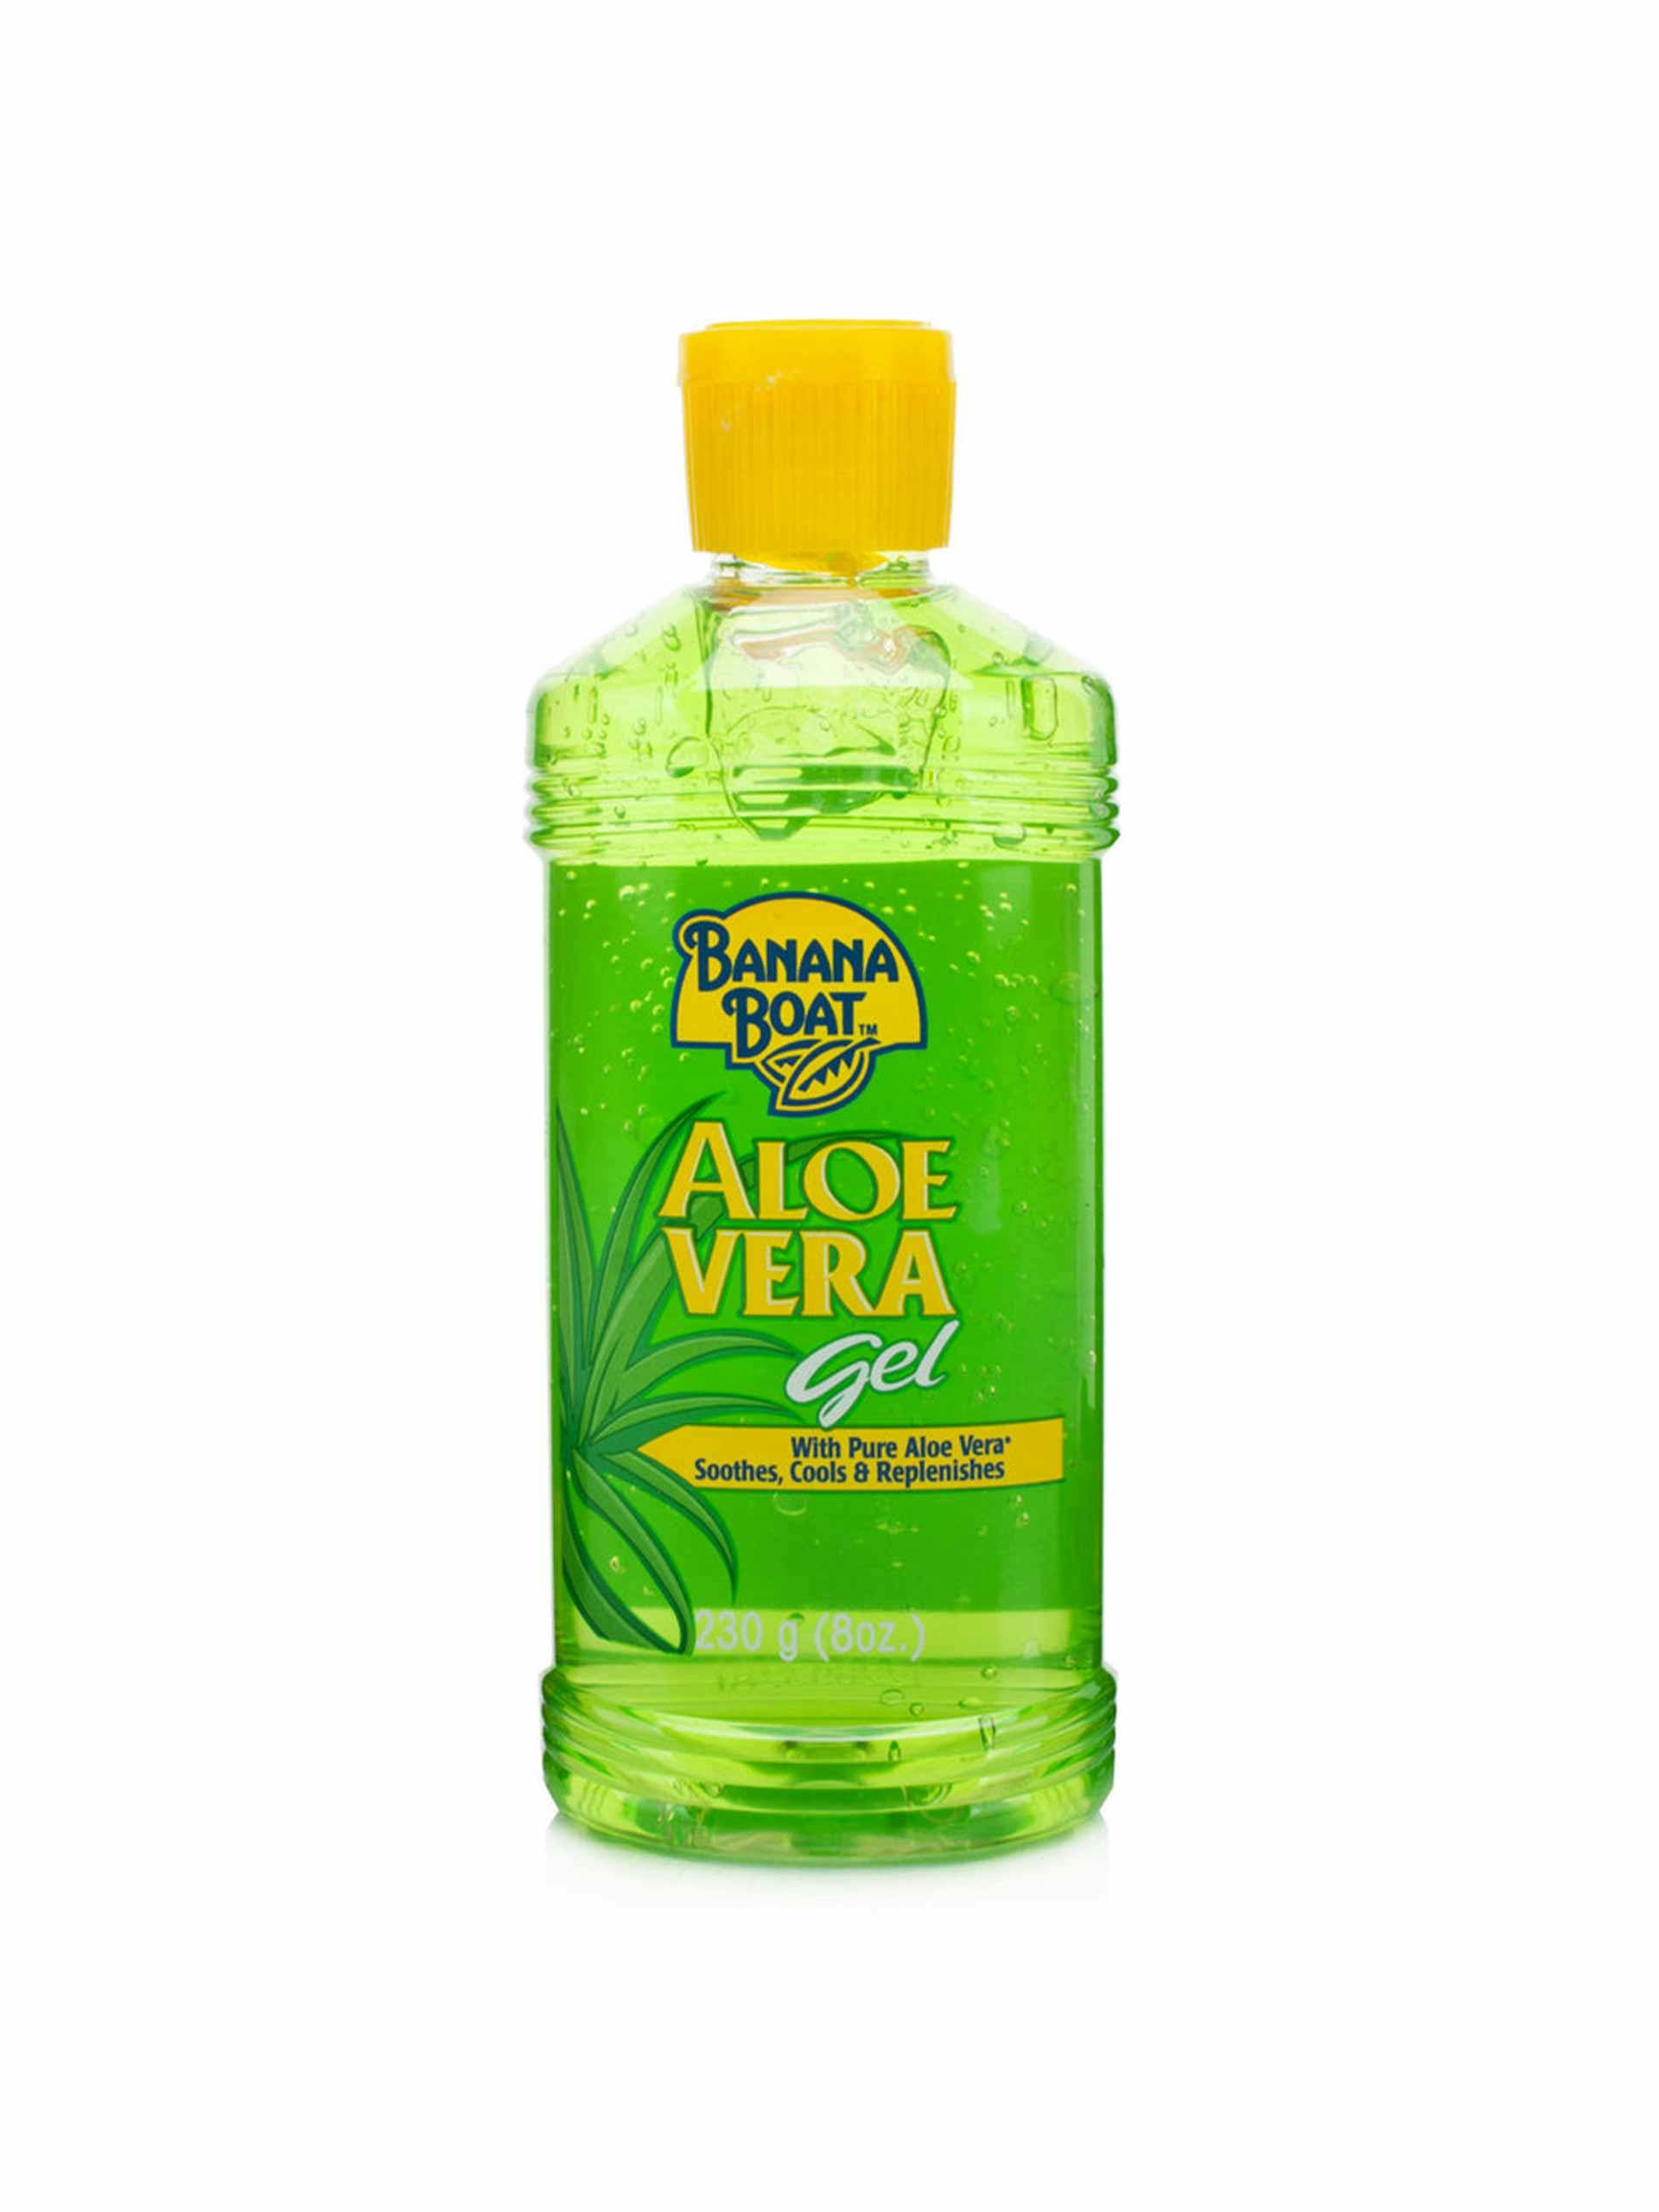 Aloe vera body gel